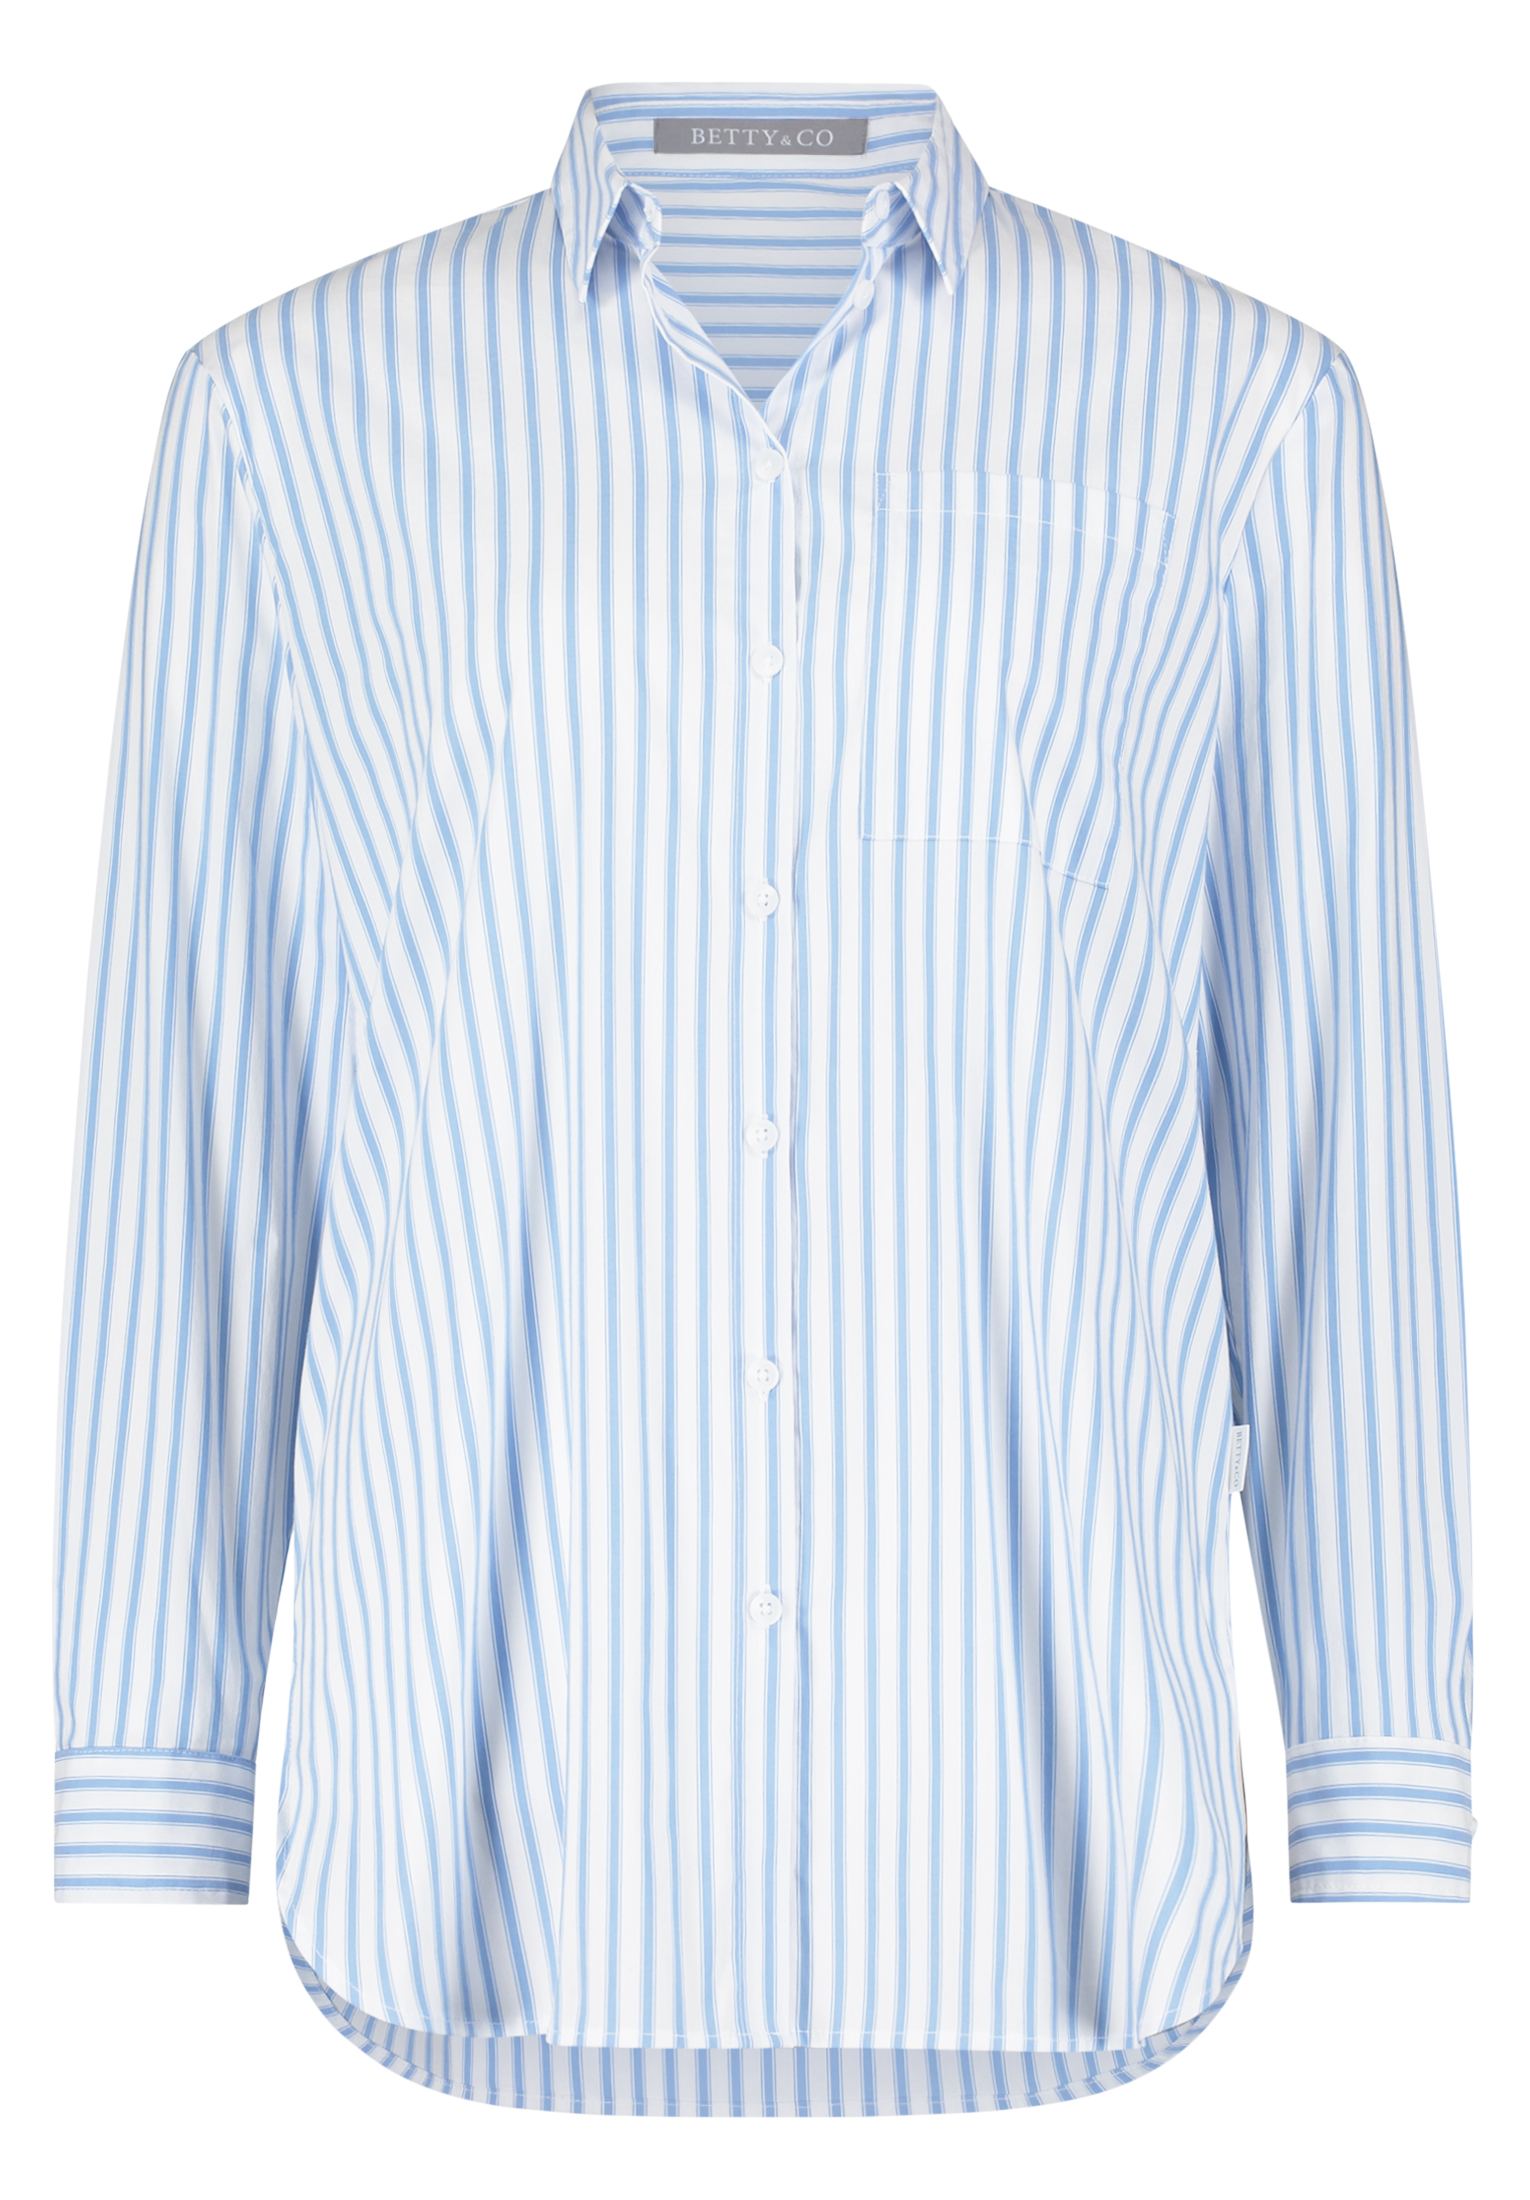 Блуза BETTY & CO Long mit Streifen, белый